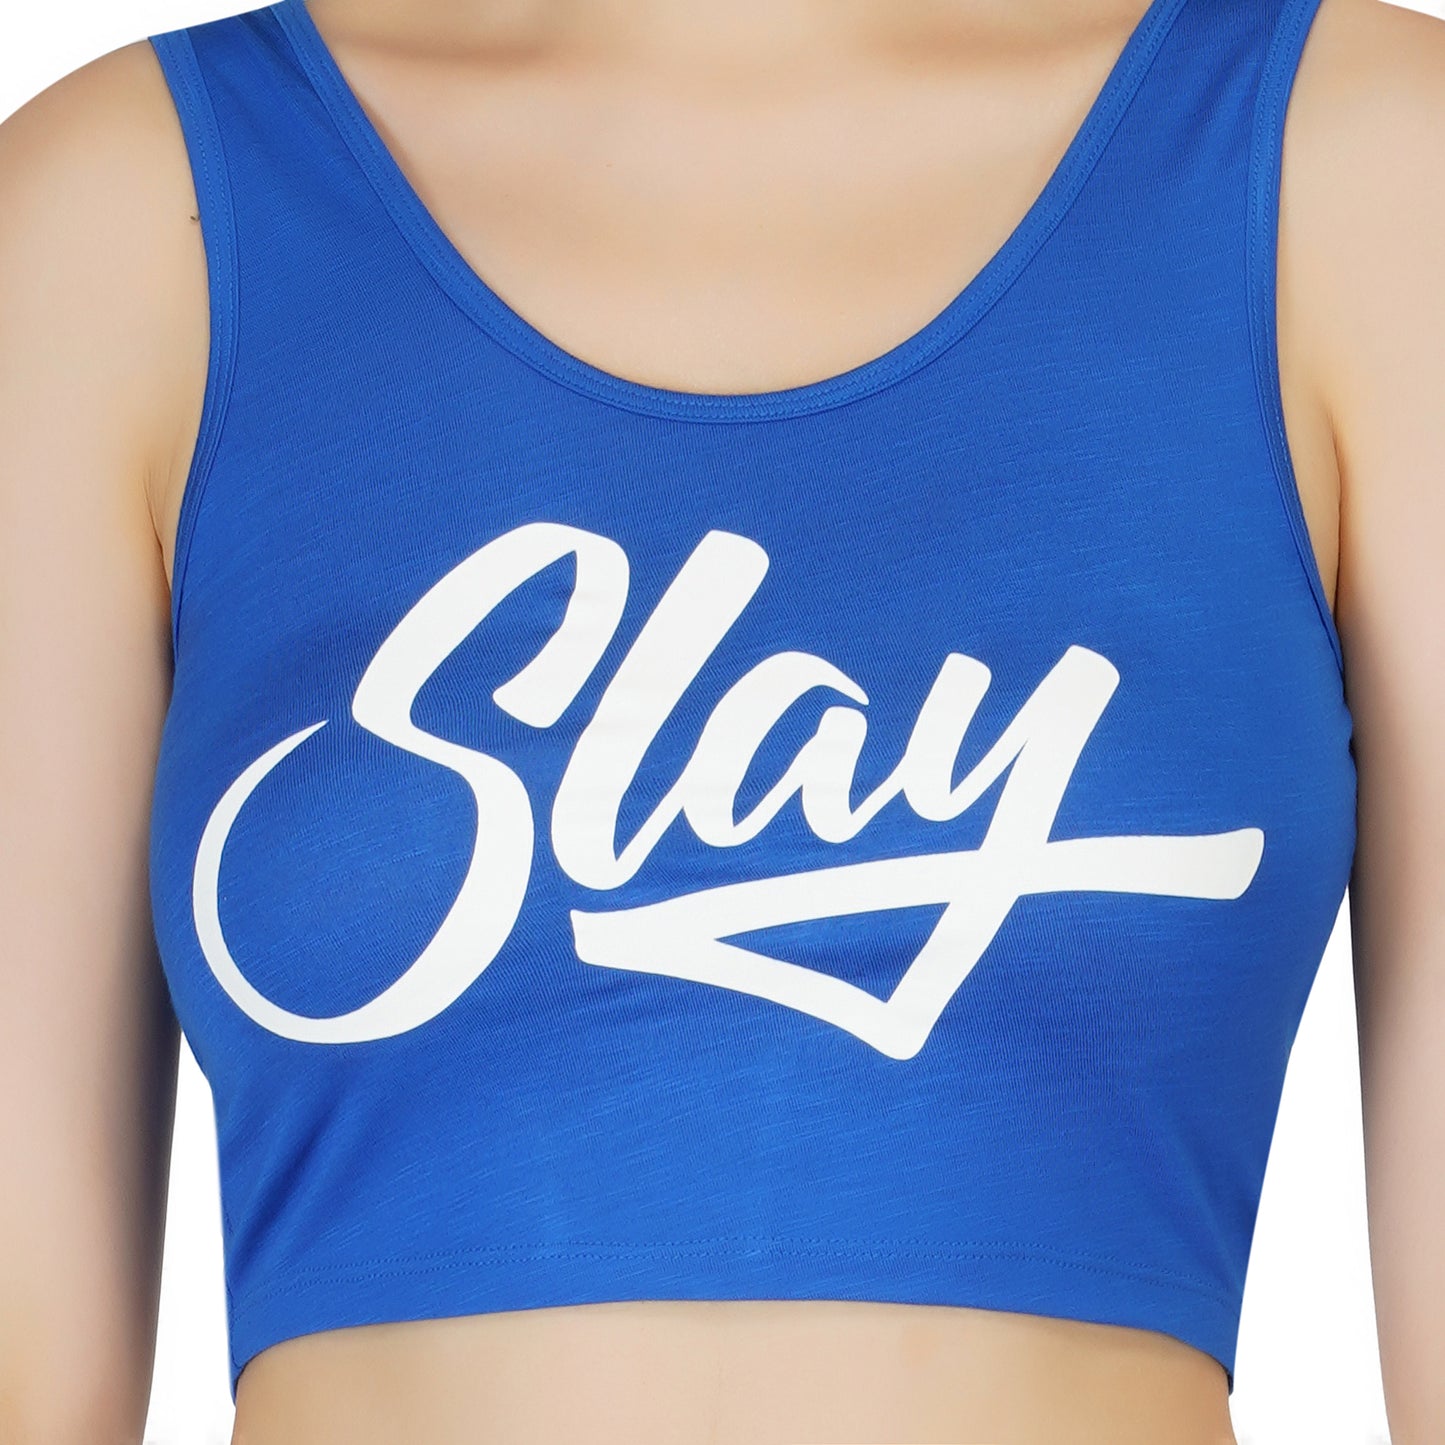 SLAY. Women's Neon Blue Printed Crop Top